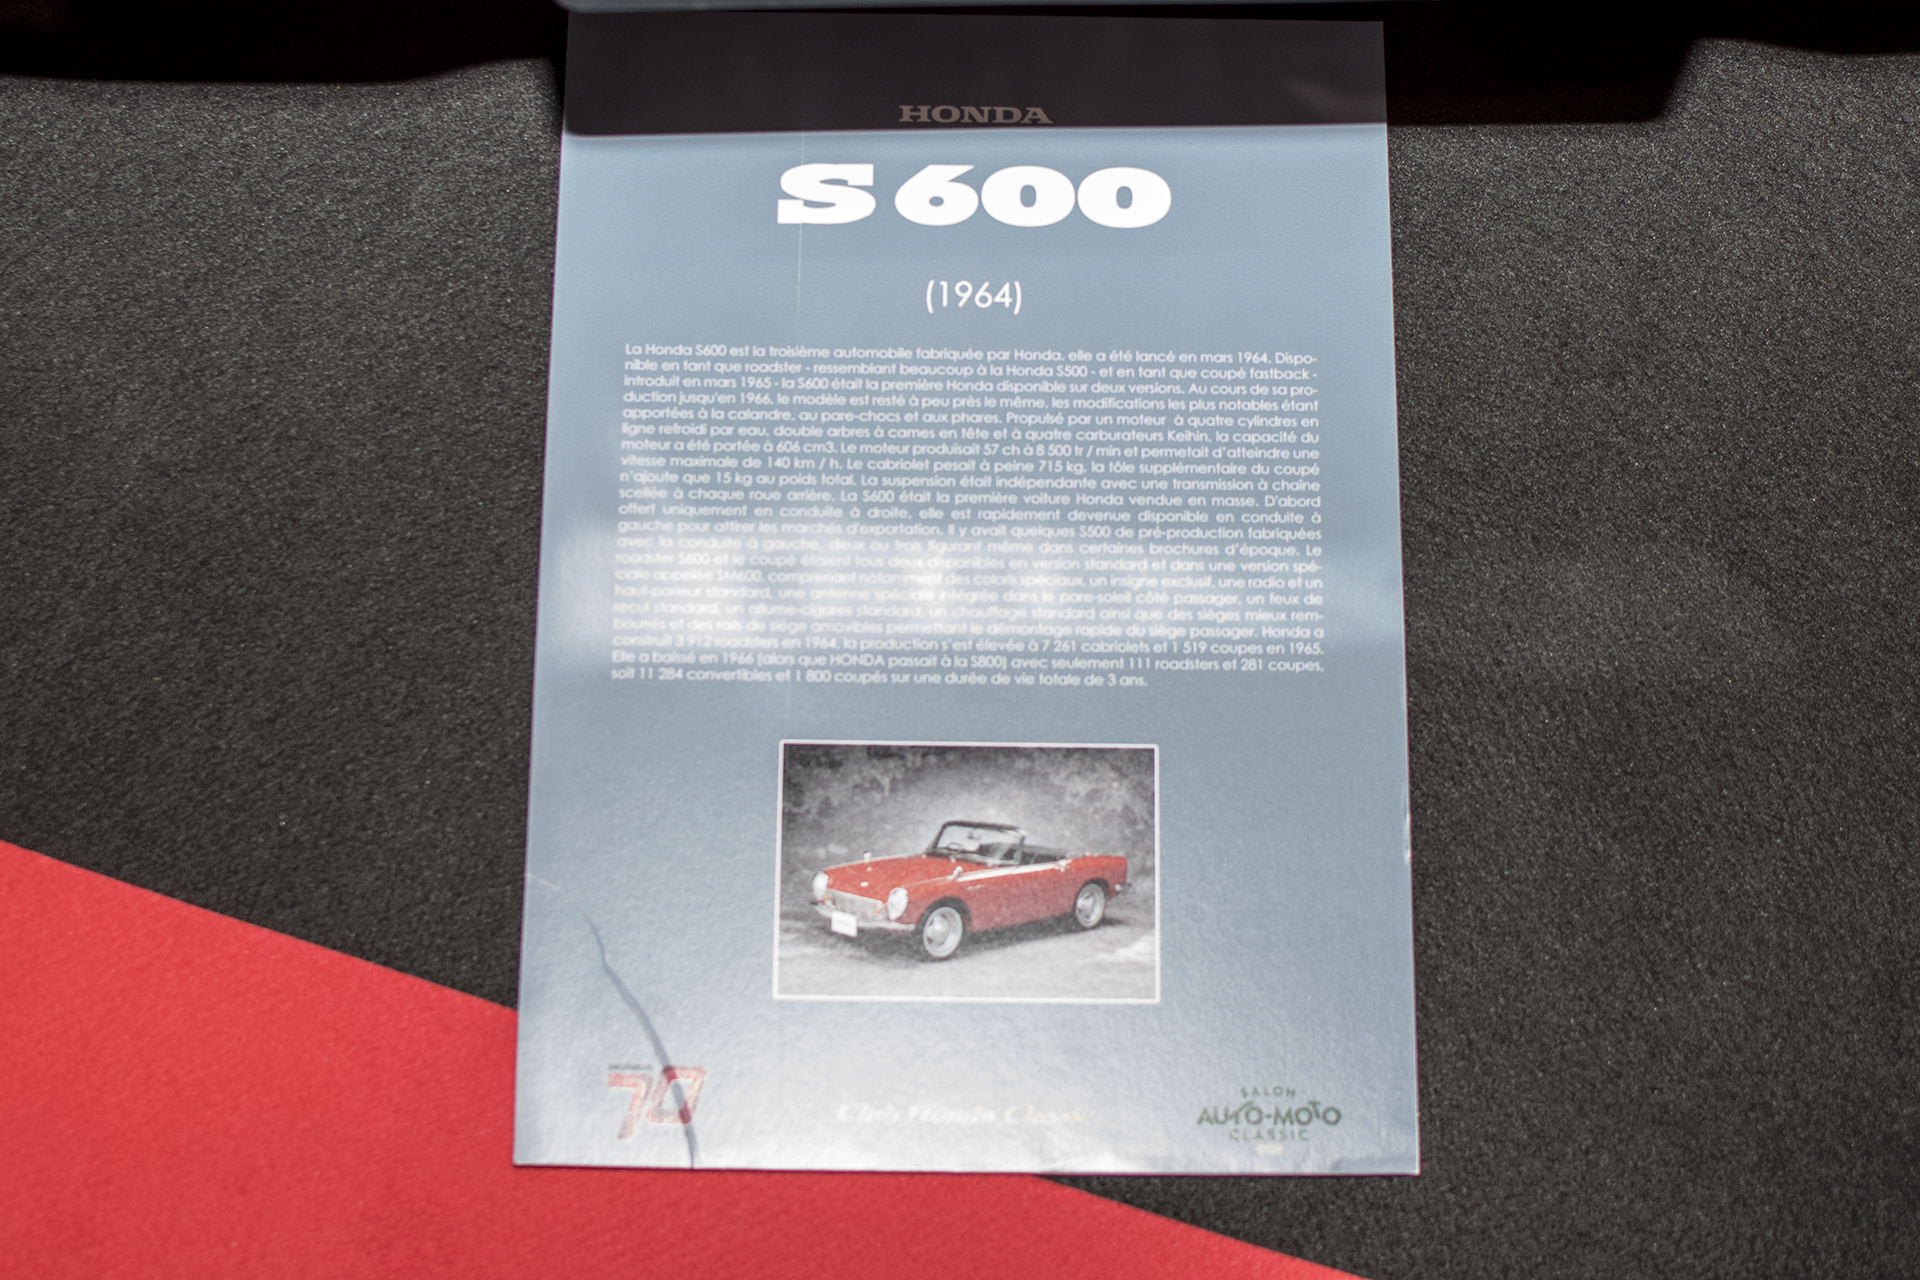 Honda S600 1964 details - Salon Auto-Moto Classic Metz 2018